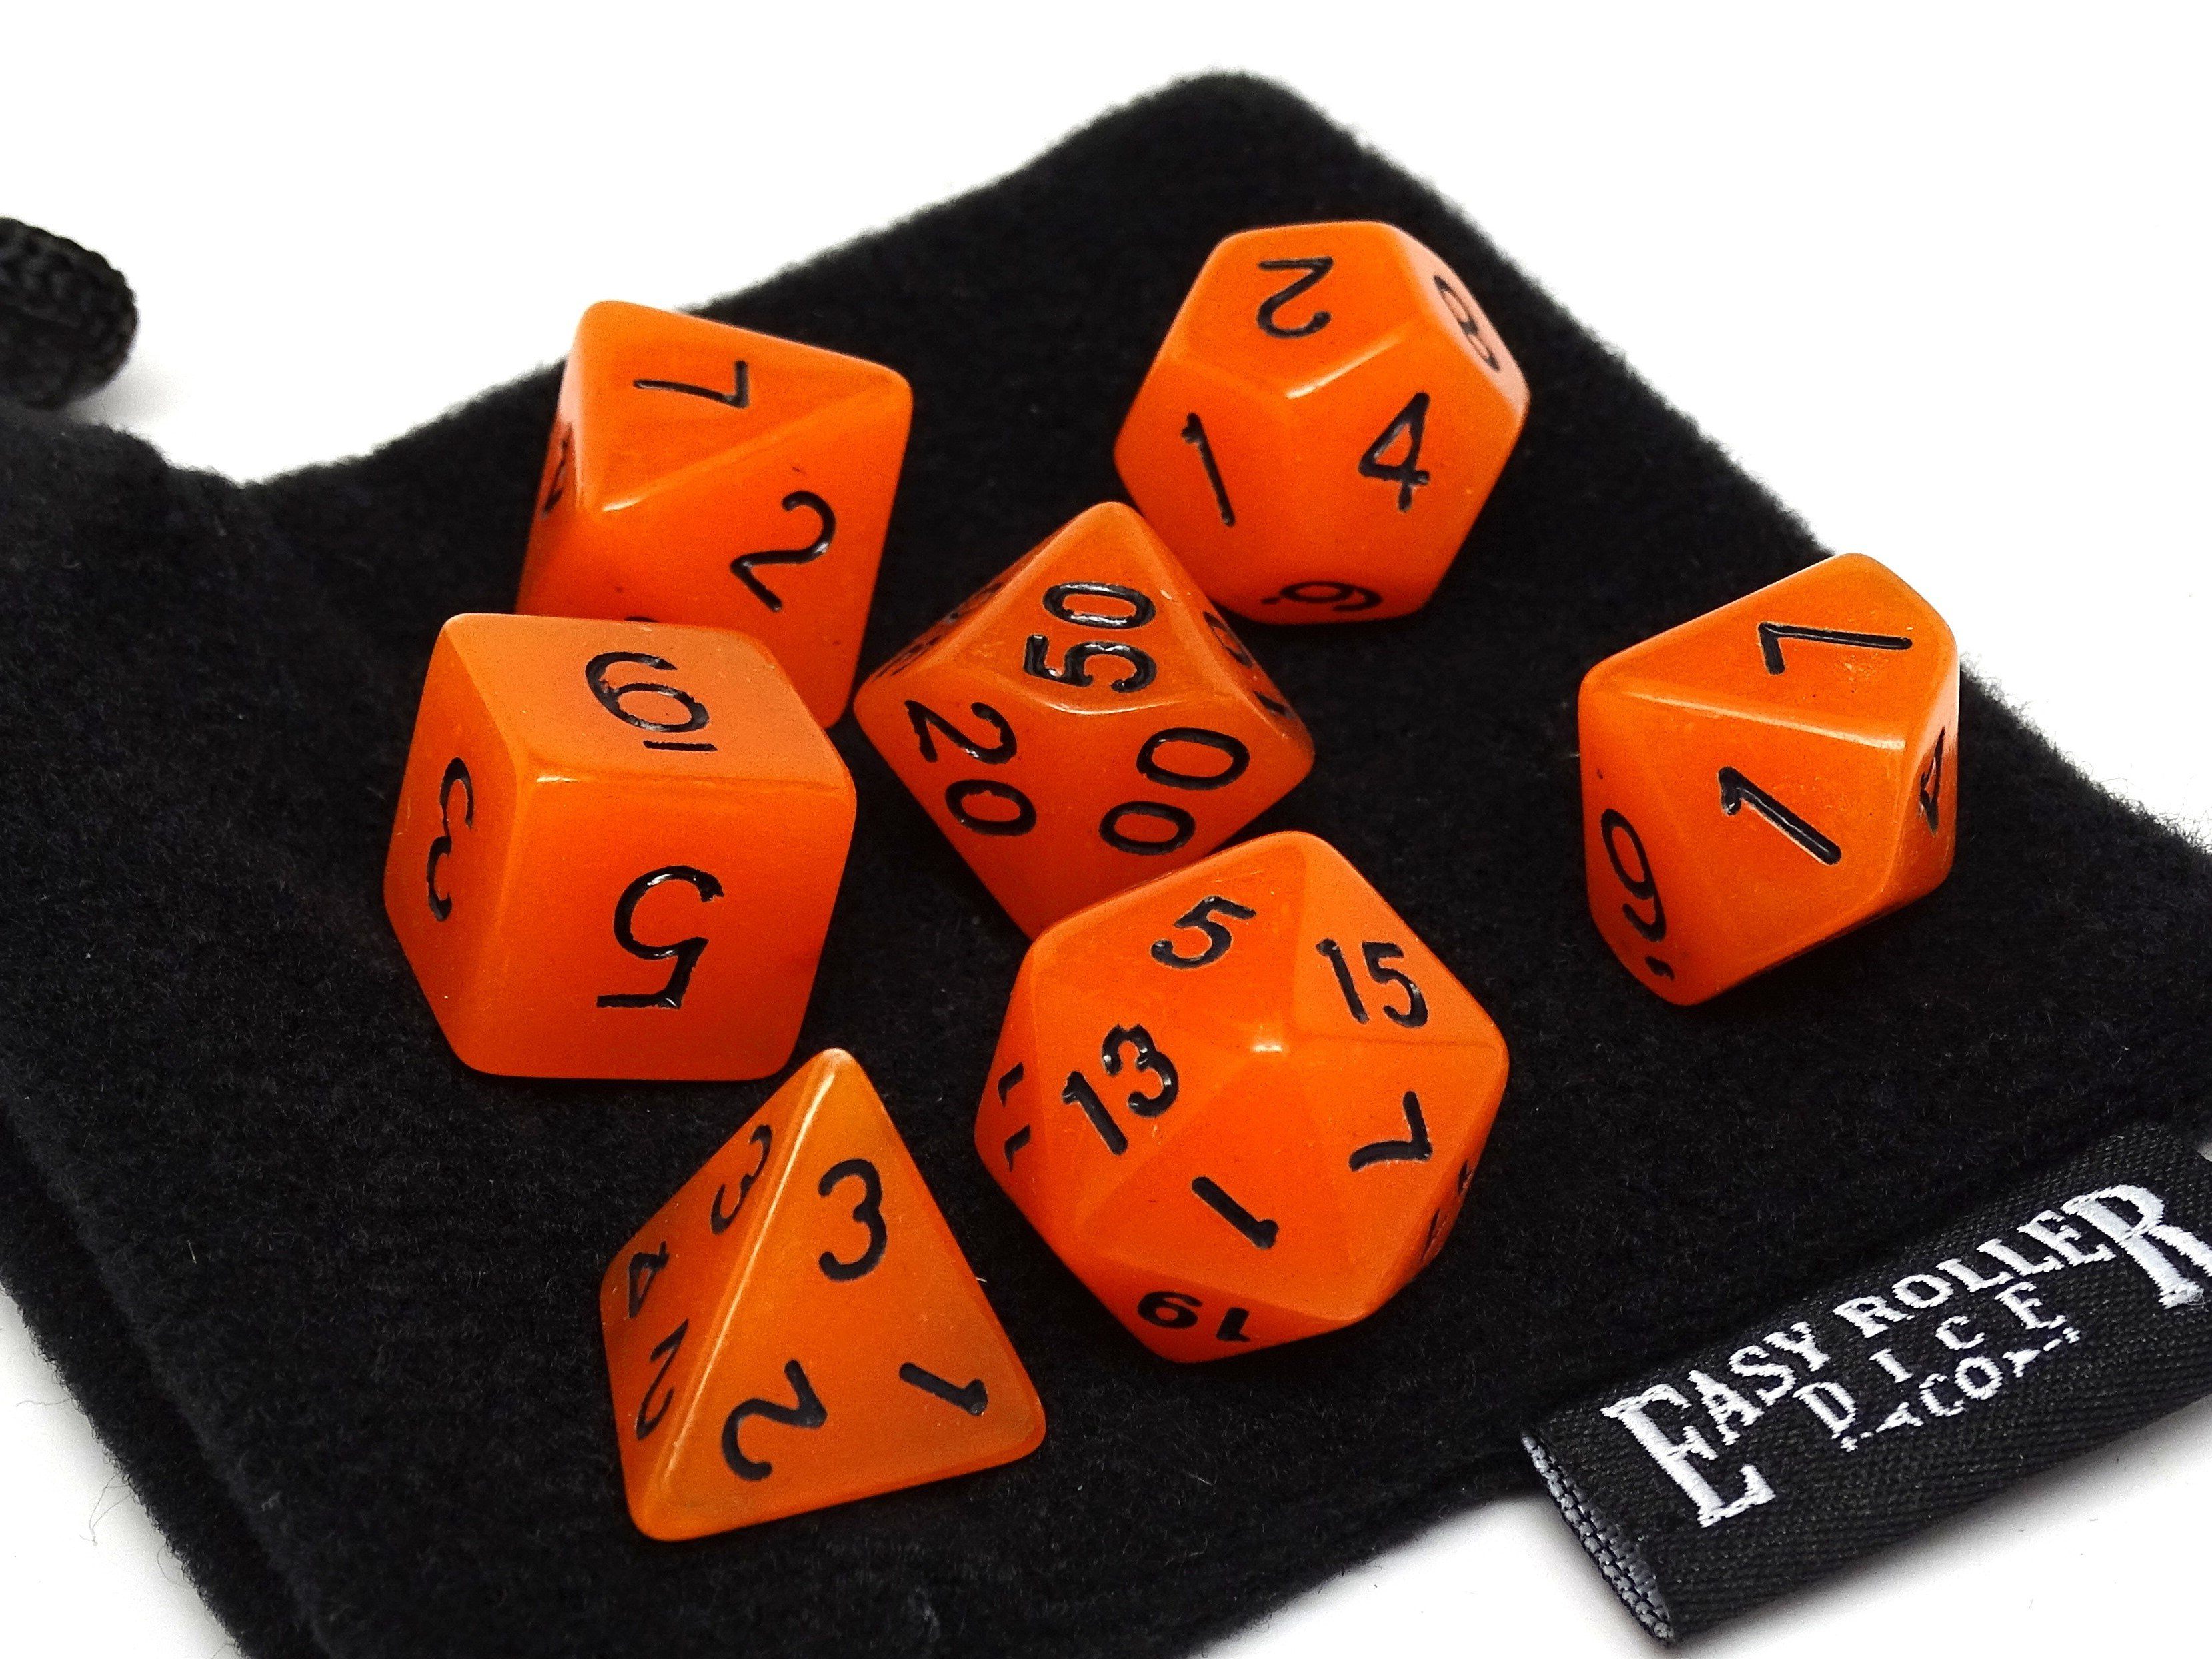 Dice and roll когда выйдет. Roll the dice. Dice оранжево черные. Handmade dice Rollers. Dice Company.